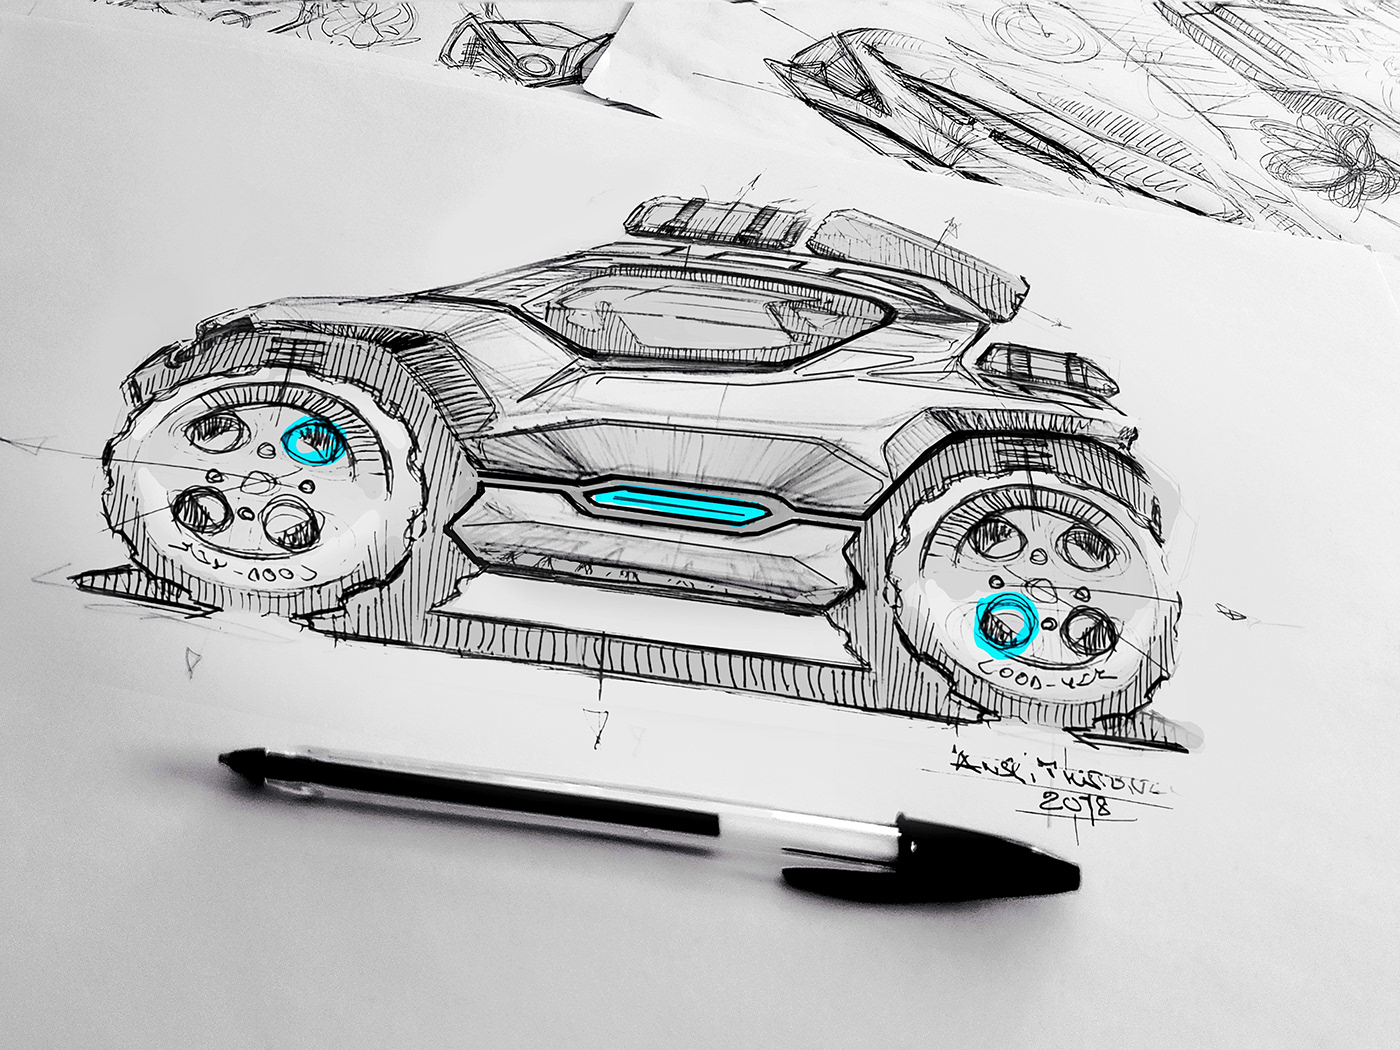 #doodling #drawing #sketching #painting #doodle #sketch #draw #pen #sketchbook #notebook #transpotationdesign #automotive #cardesign #motorbikedesign #motorcycle #design #productdesign #industrialdesign